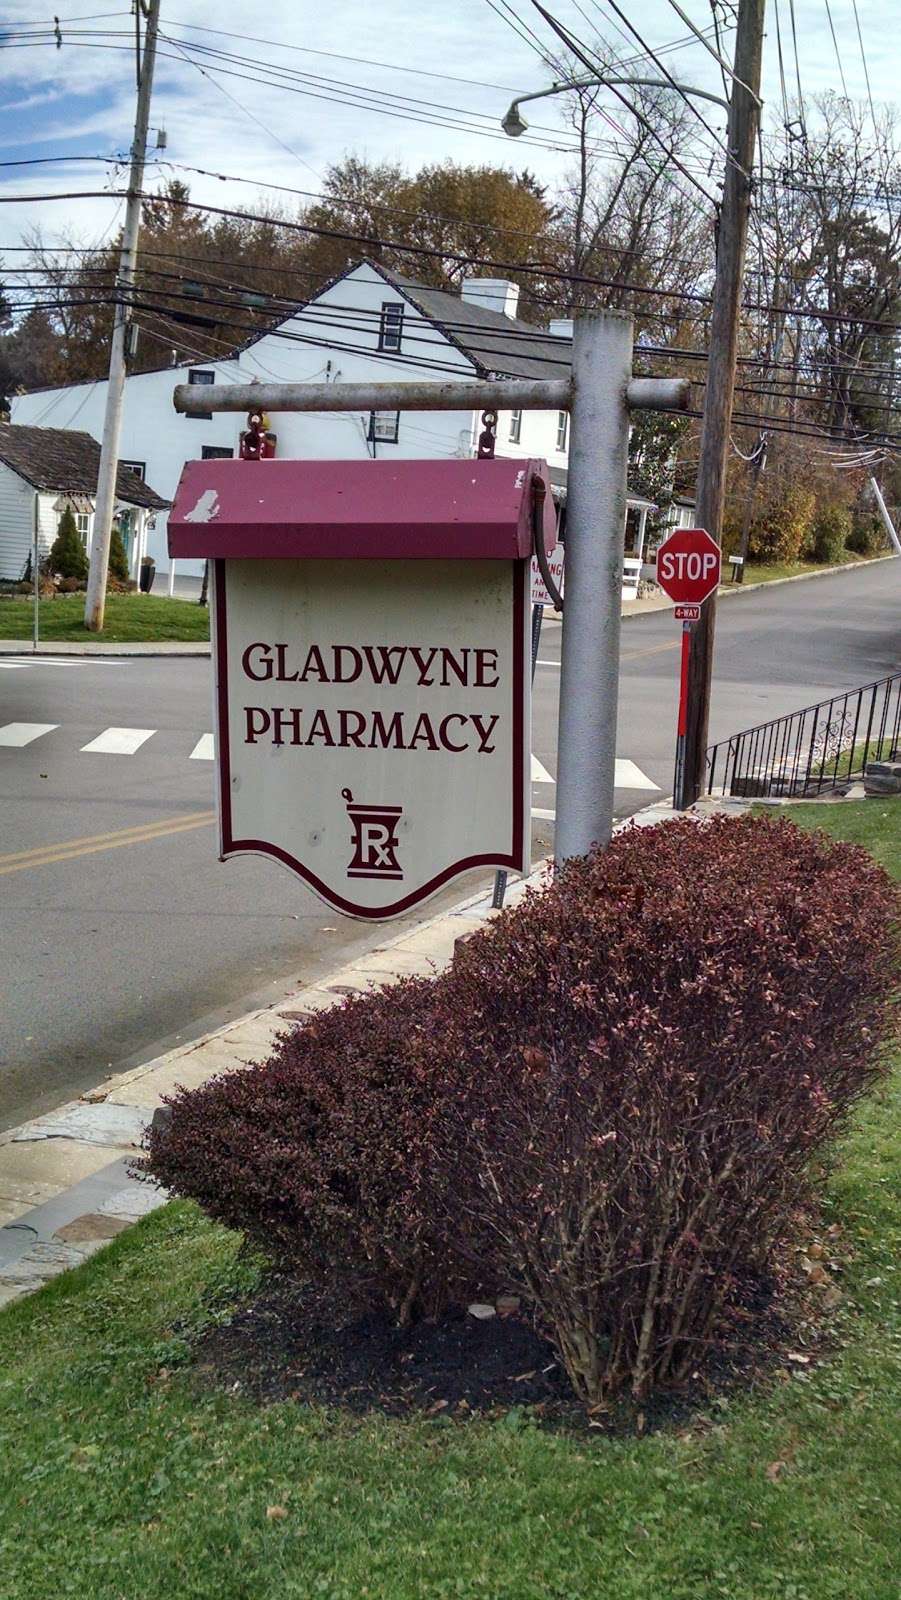 Gladwyne Pharmacy | 352 Righters Mill Rd, Gladwyne, PA 19035 | Phone: (610) 649-1100